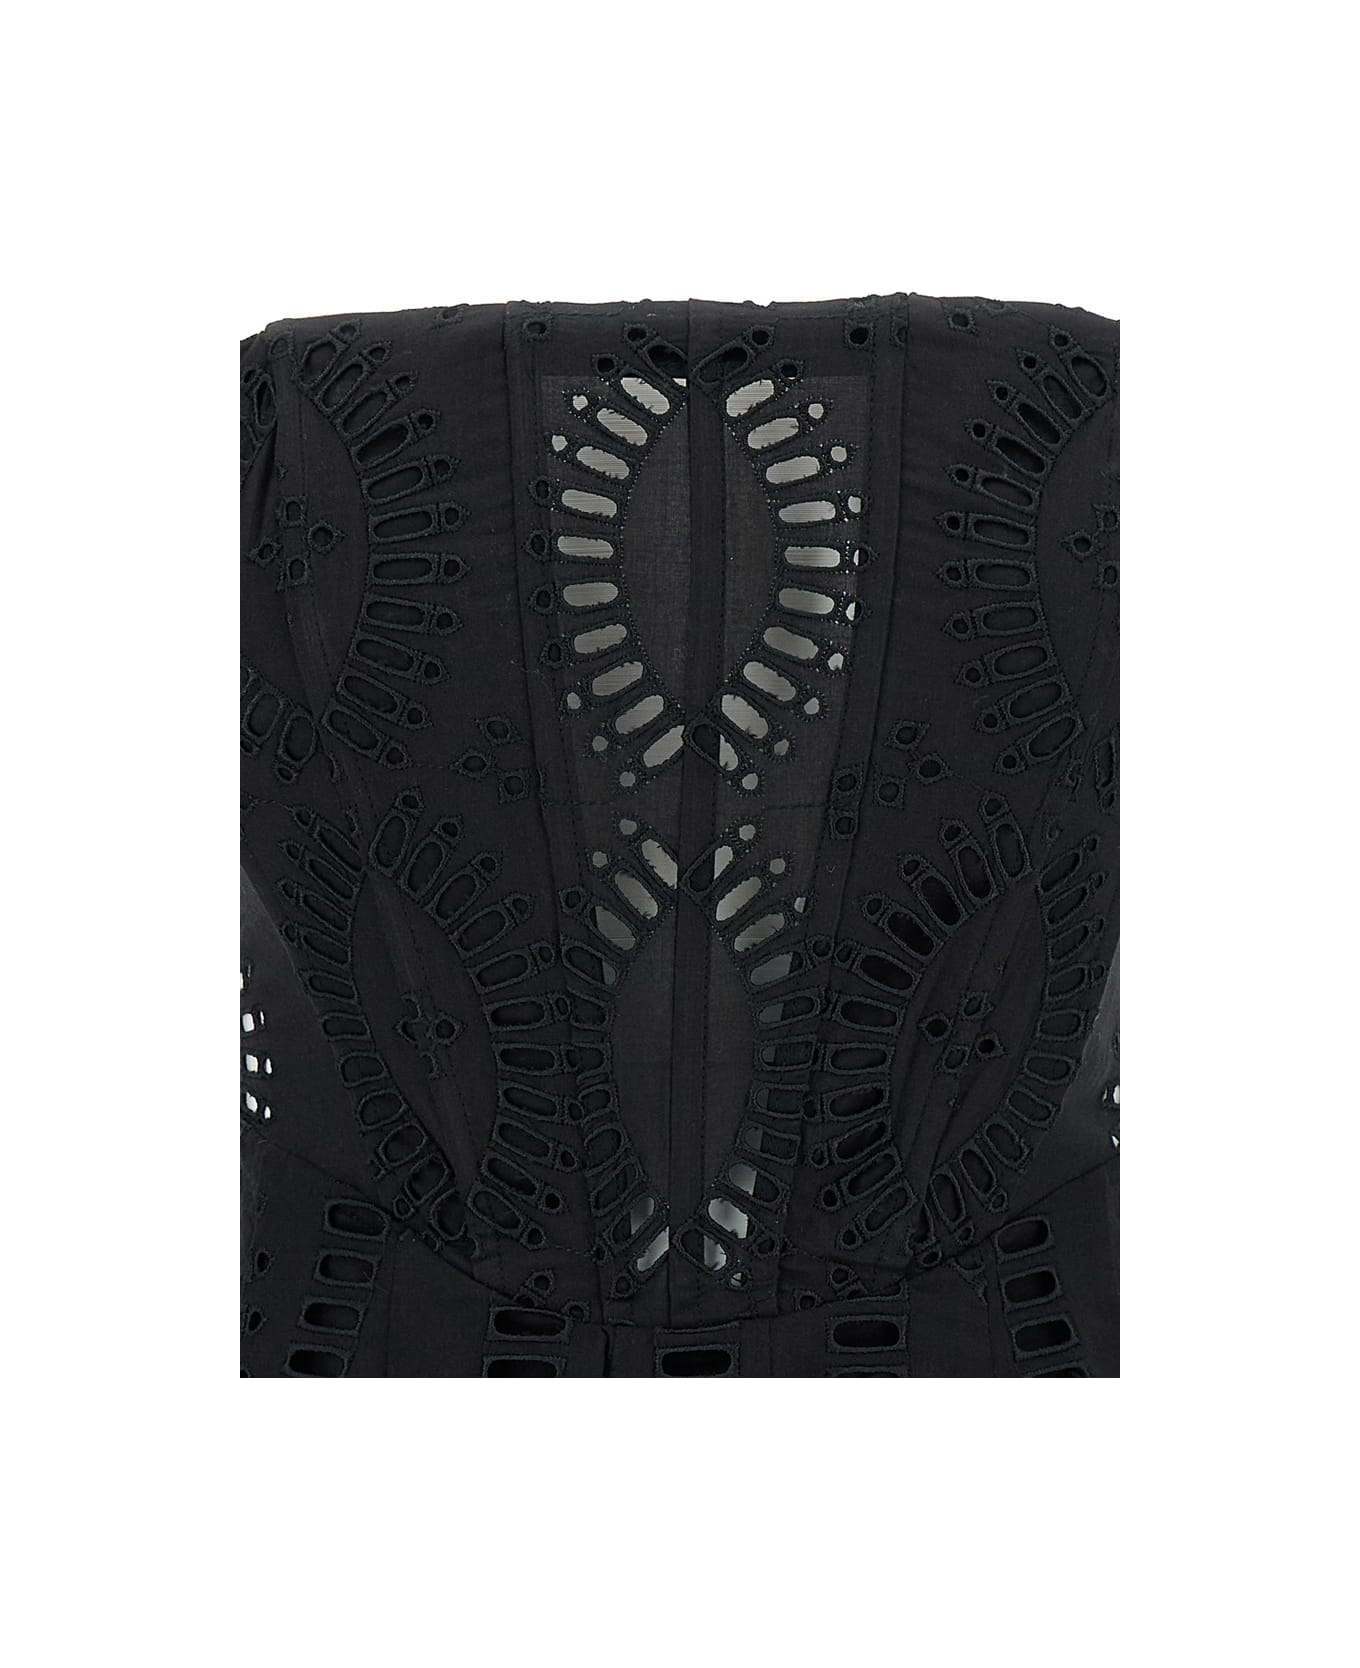 Charo Ruiz 'zannick' Mini Black Dress With Flower Lace Embroidery Woman - Black